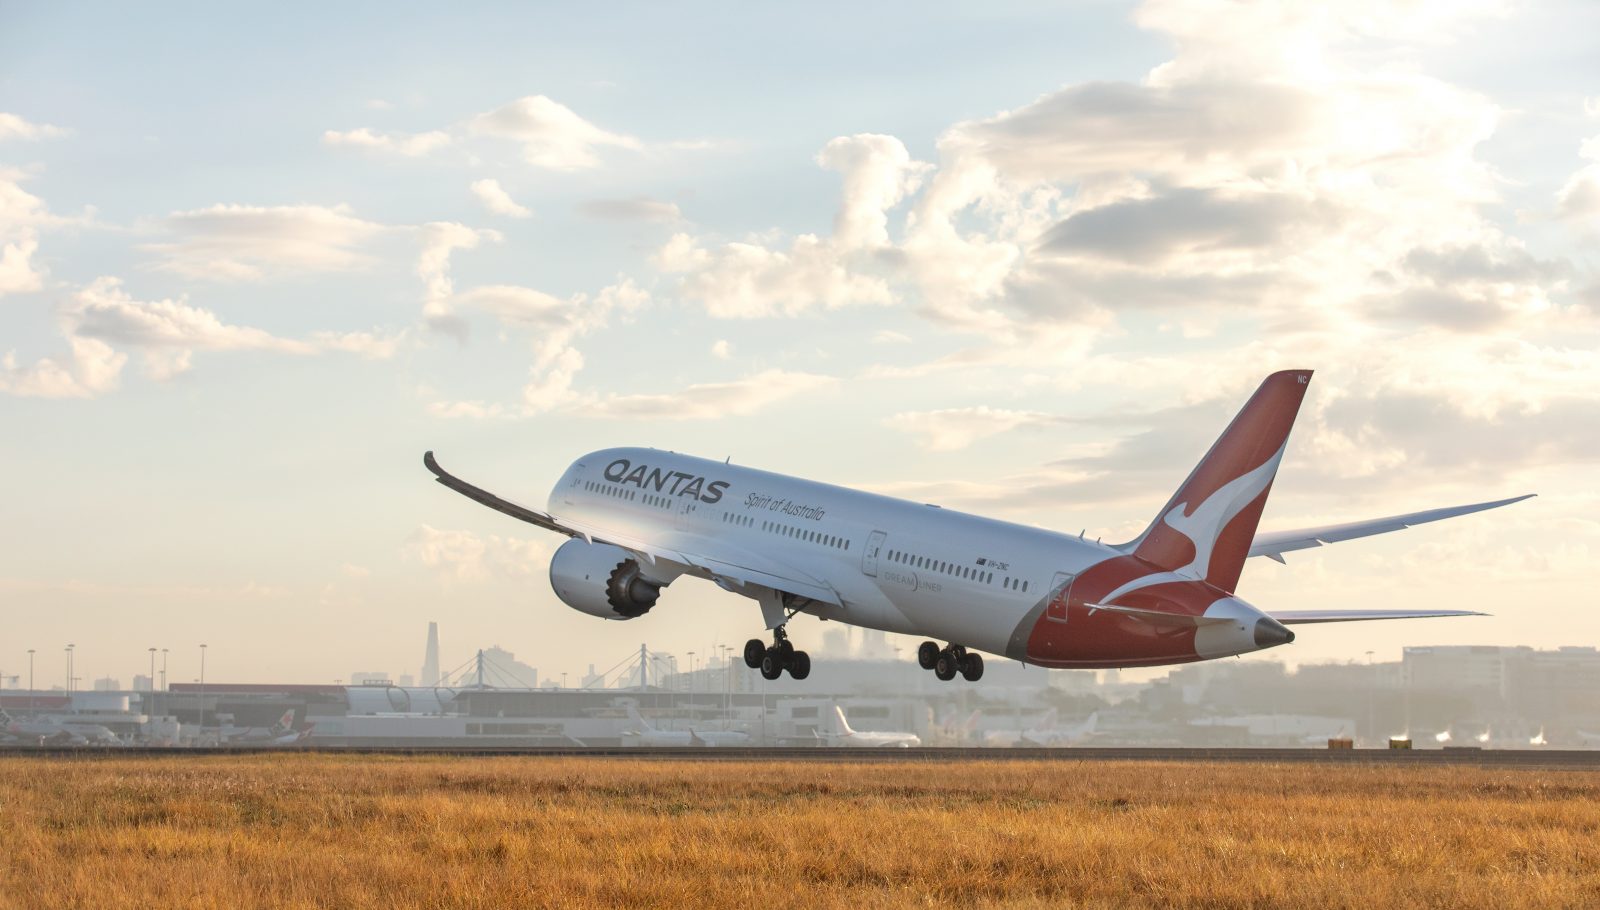 qantas boeing 787 dreamliner taking off